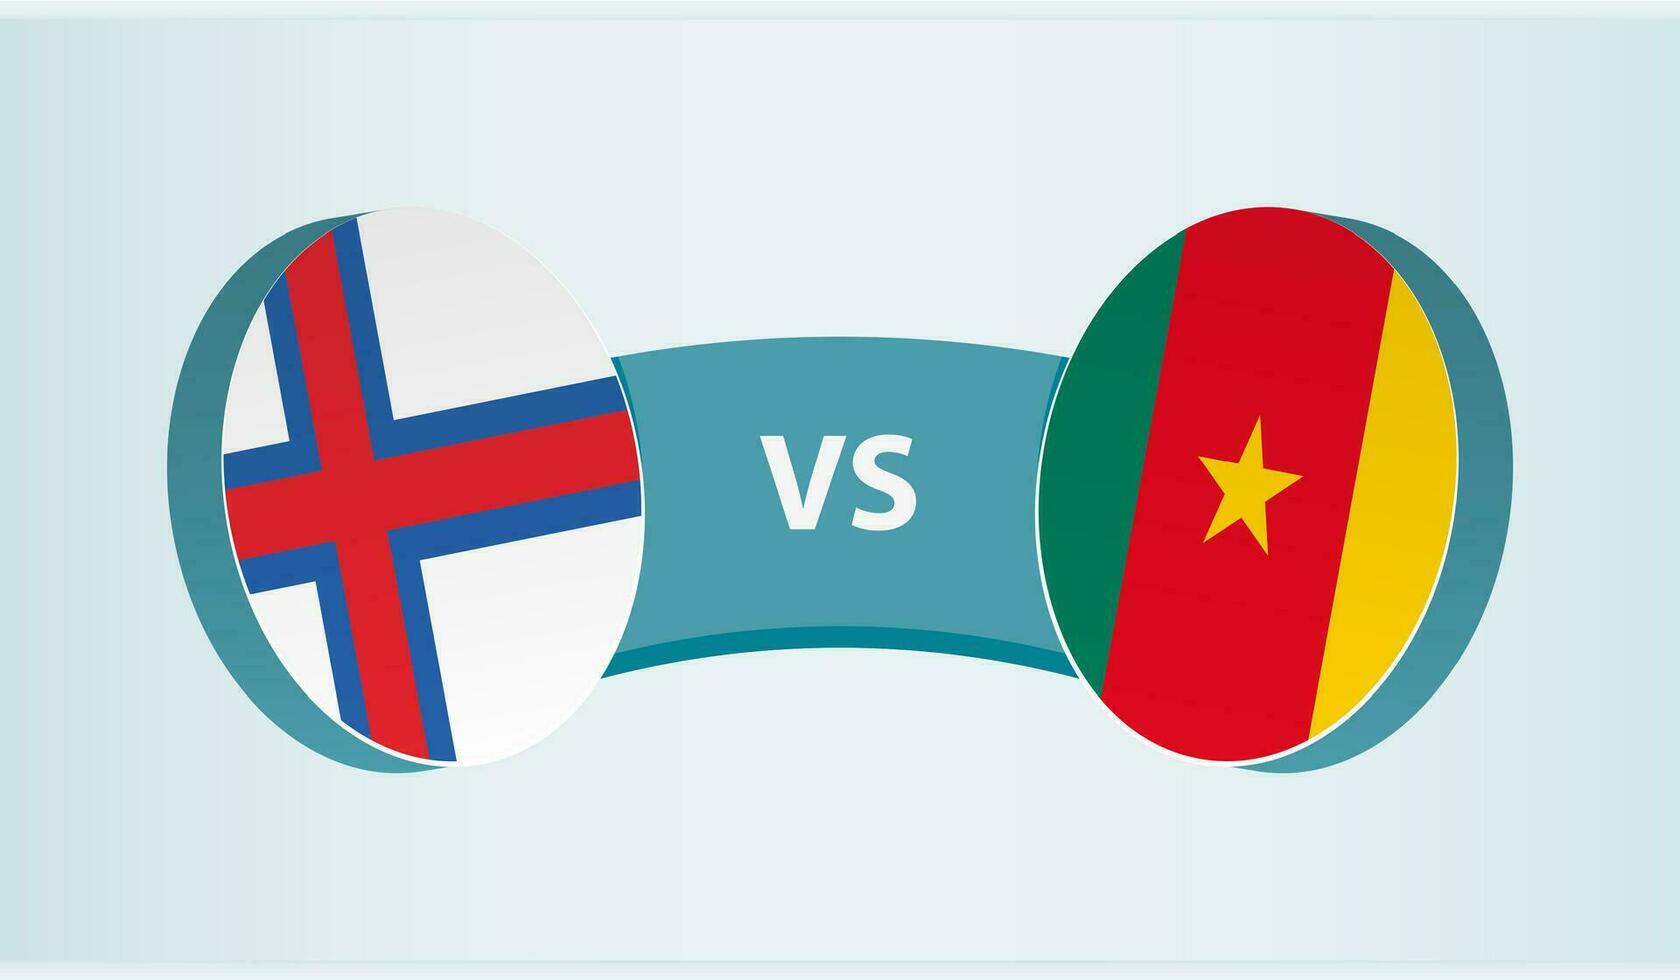 Faroe Islands versus Cameroon, team sports competition concept. vector